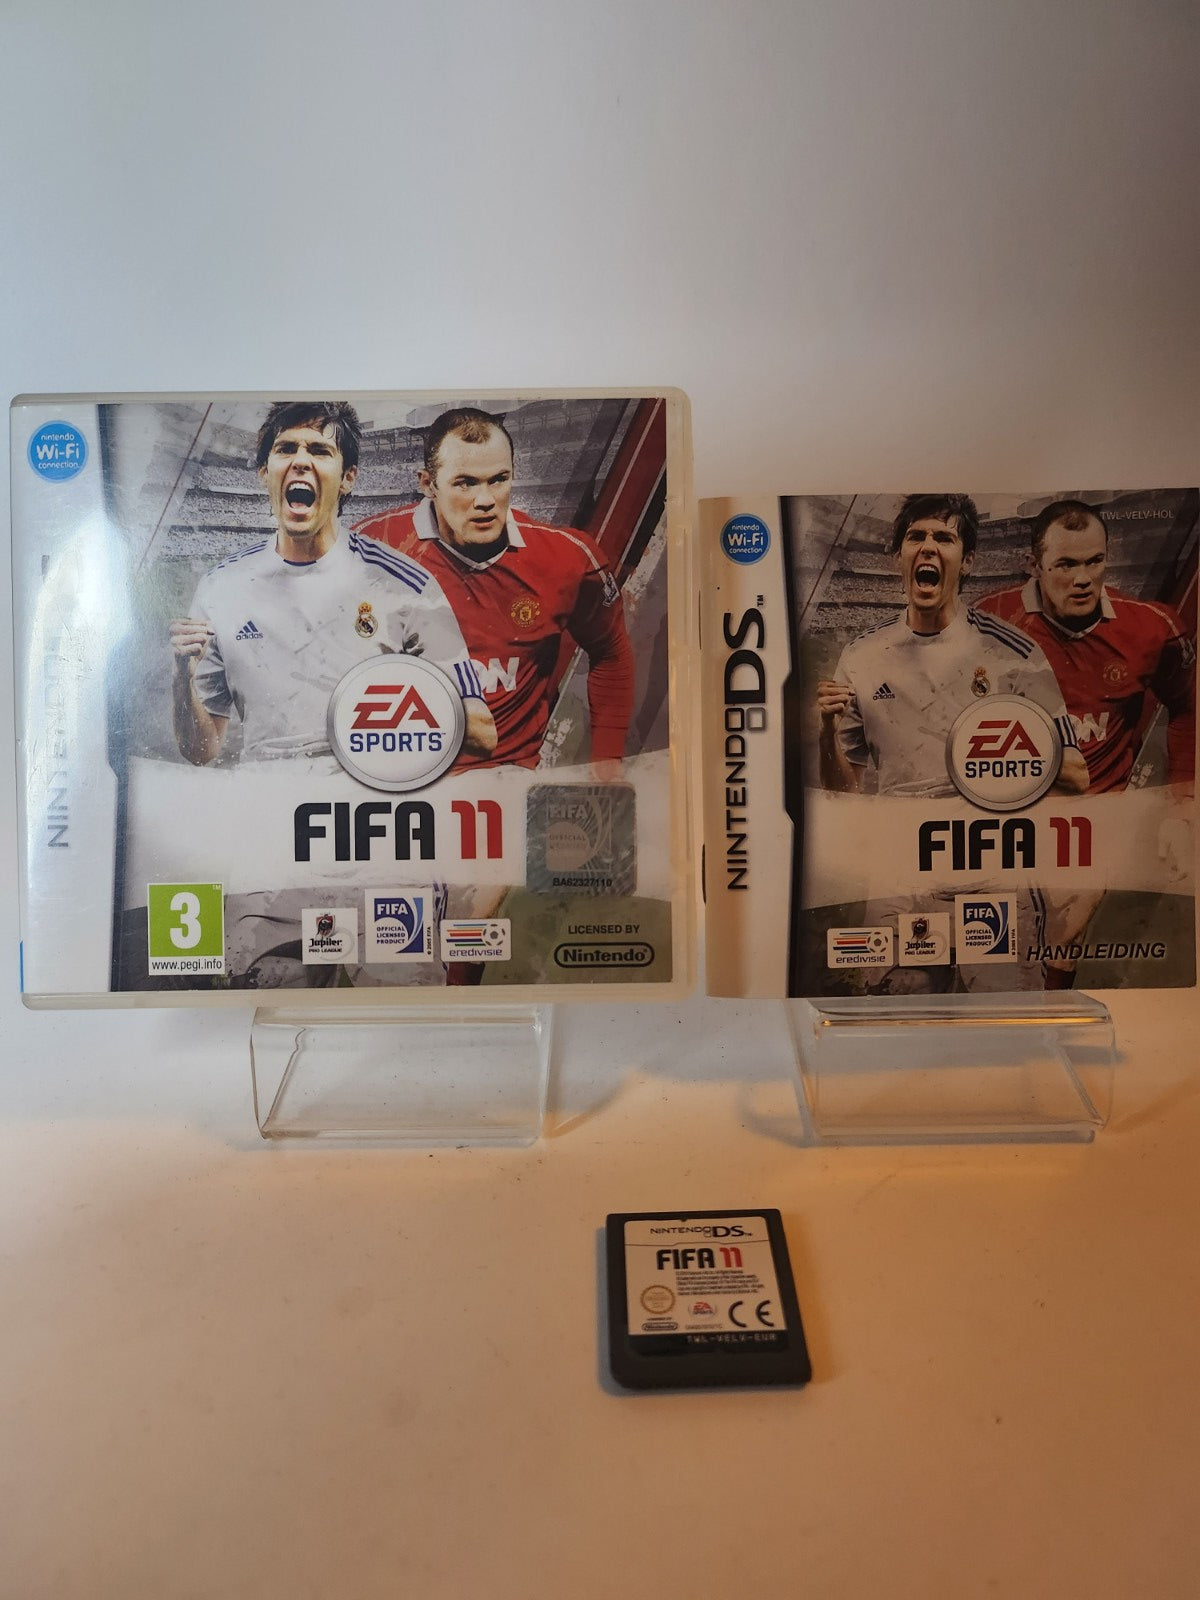 FIFA 11 Nintendo DS